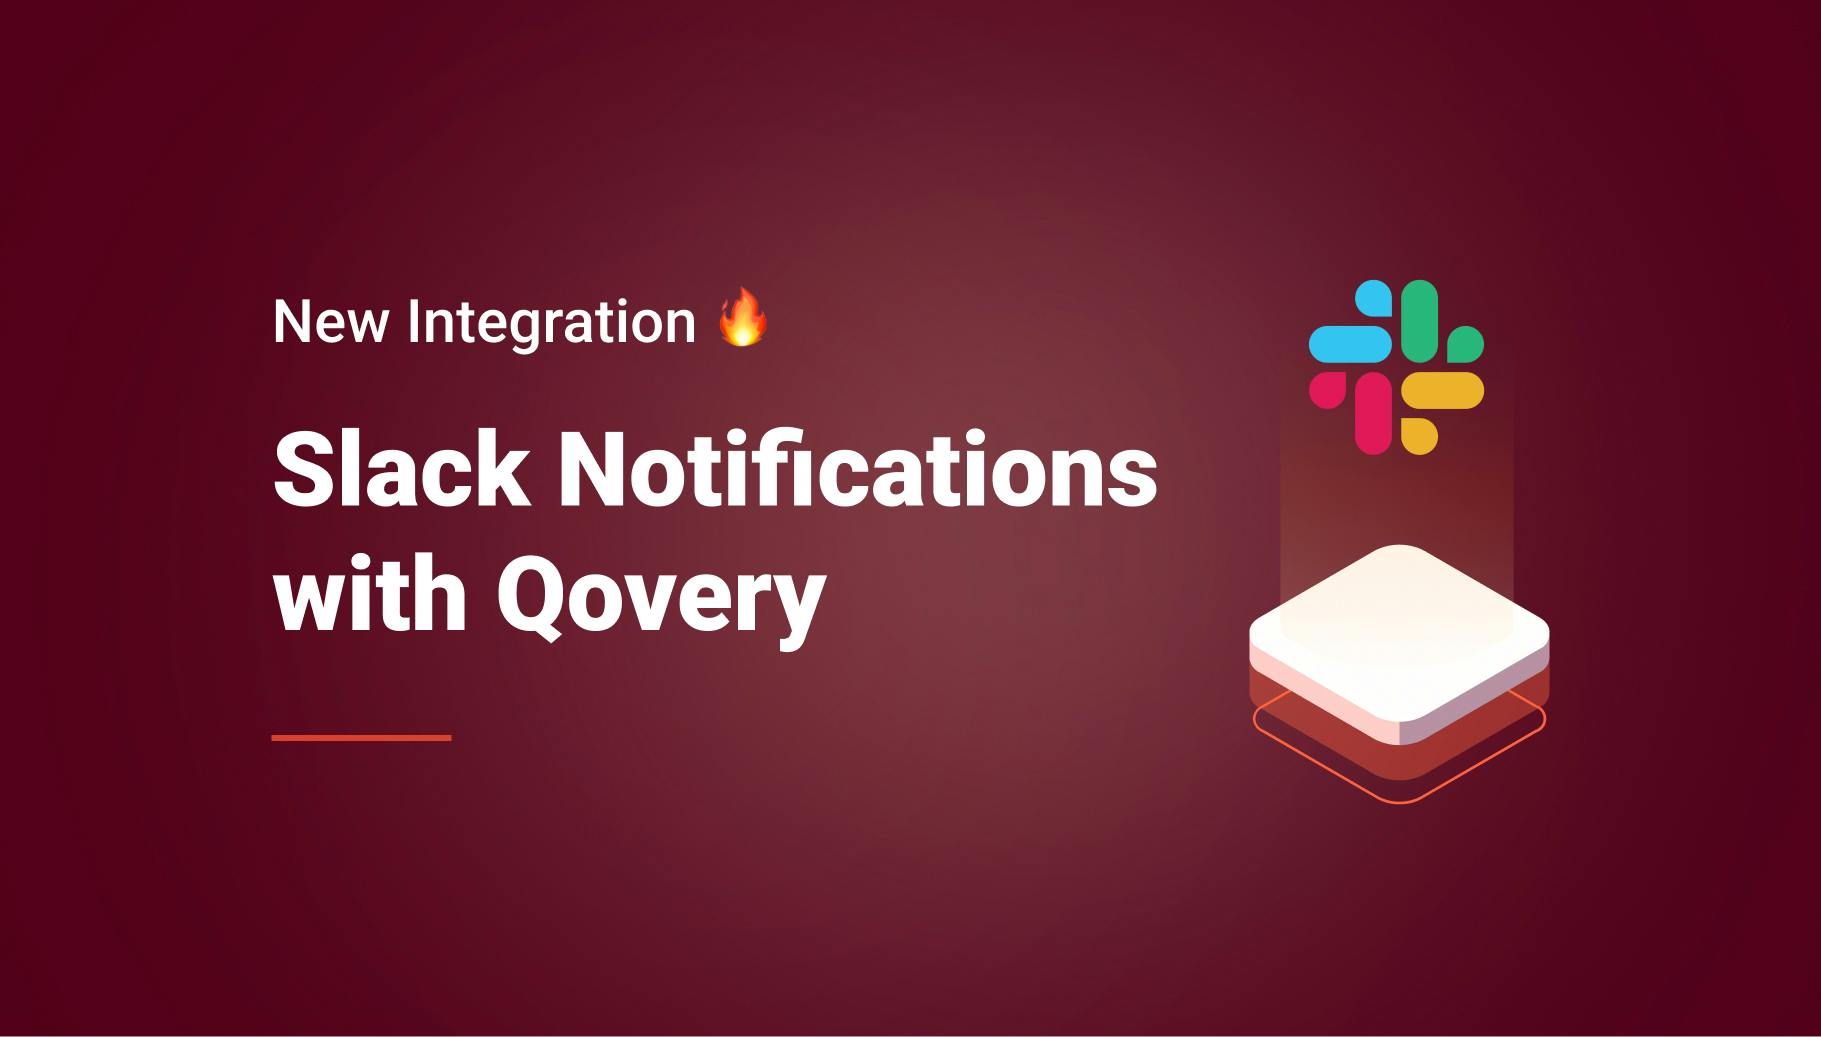 New integration: Receive deployment notifications into Slack - Qovery